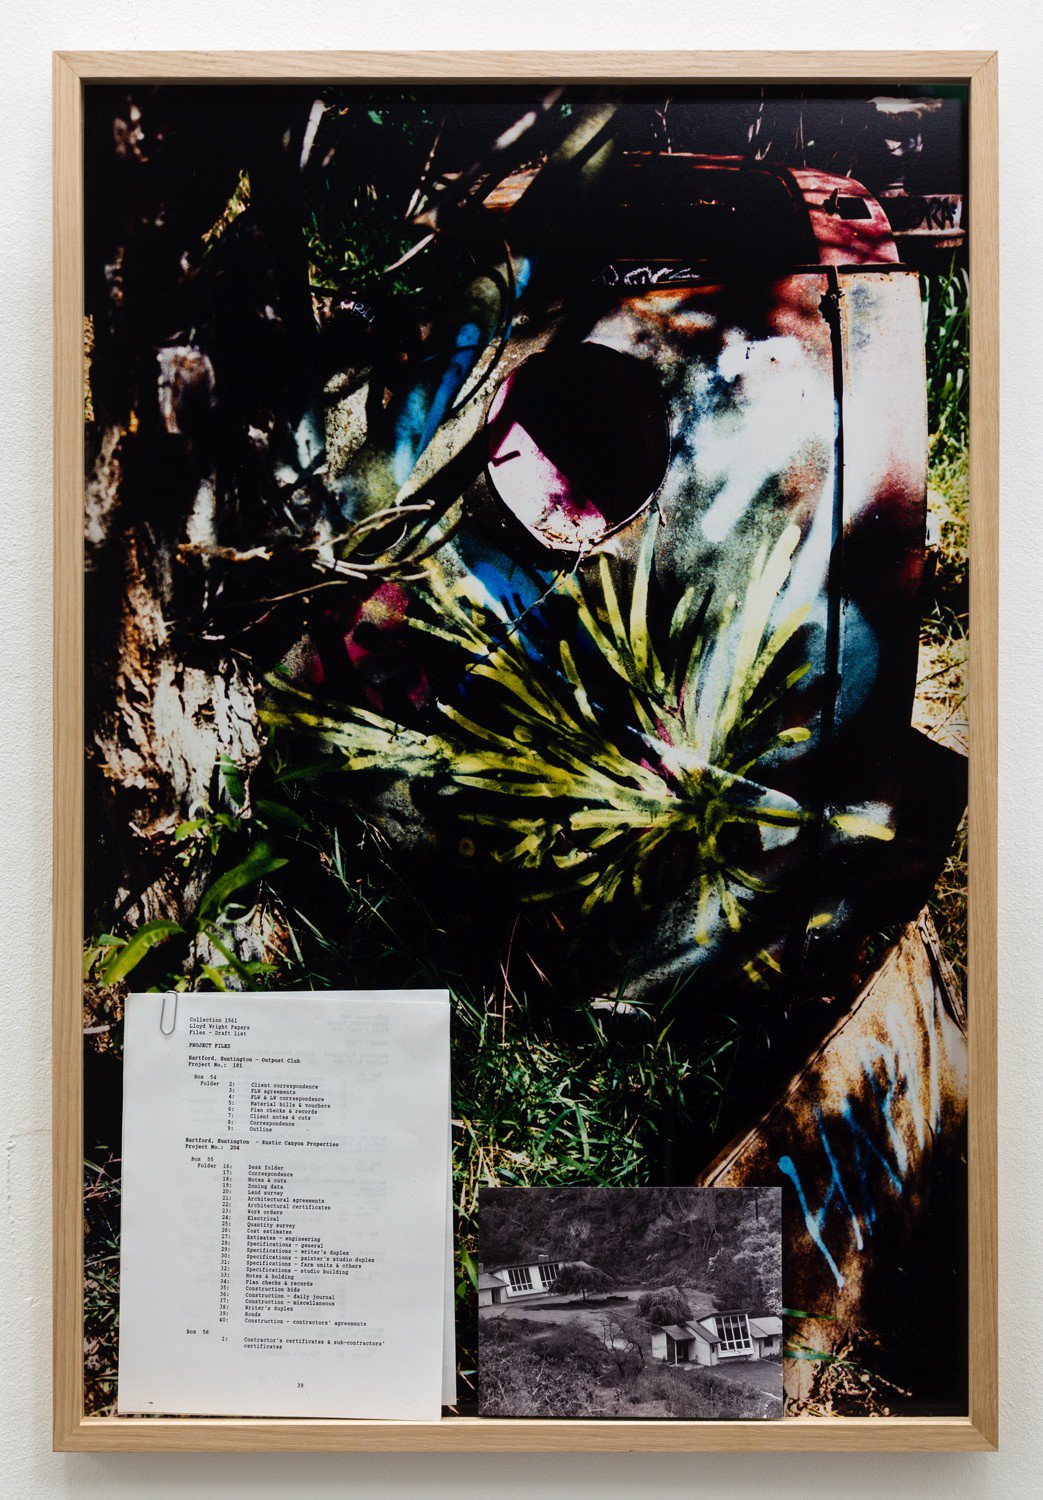 Marius EnghWestfalia, 2013Crossed analog photograph, collage90 x 60 cm